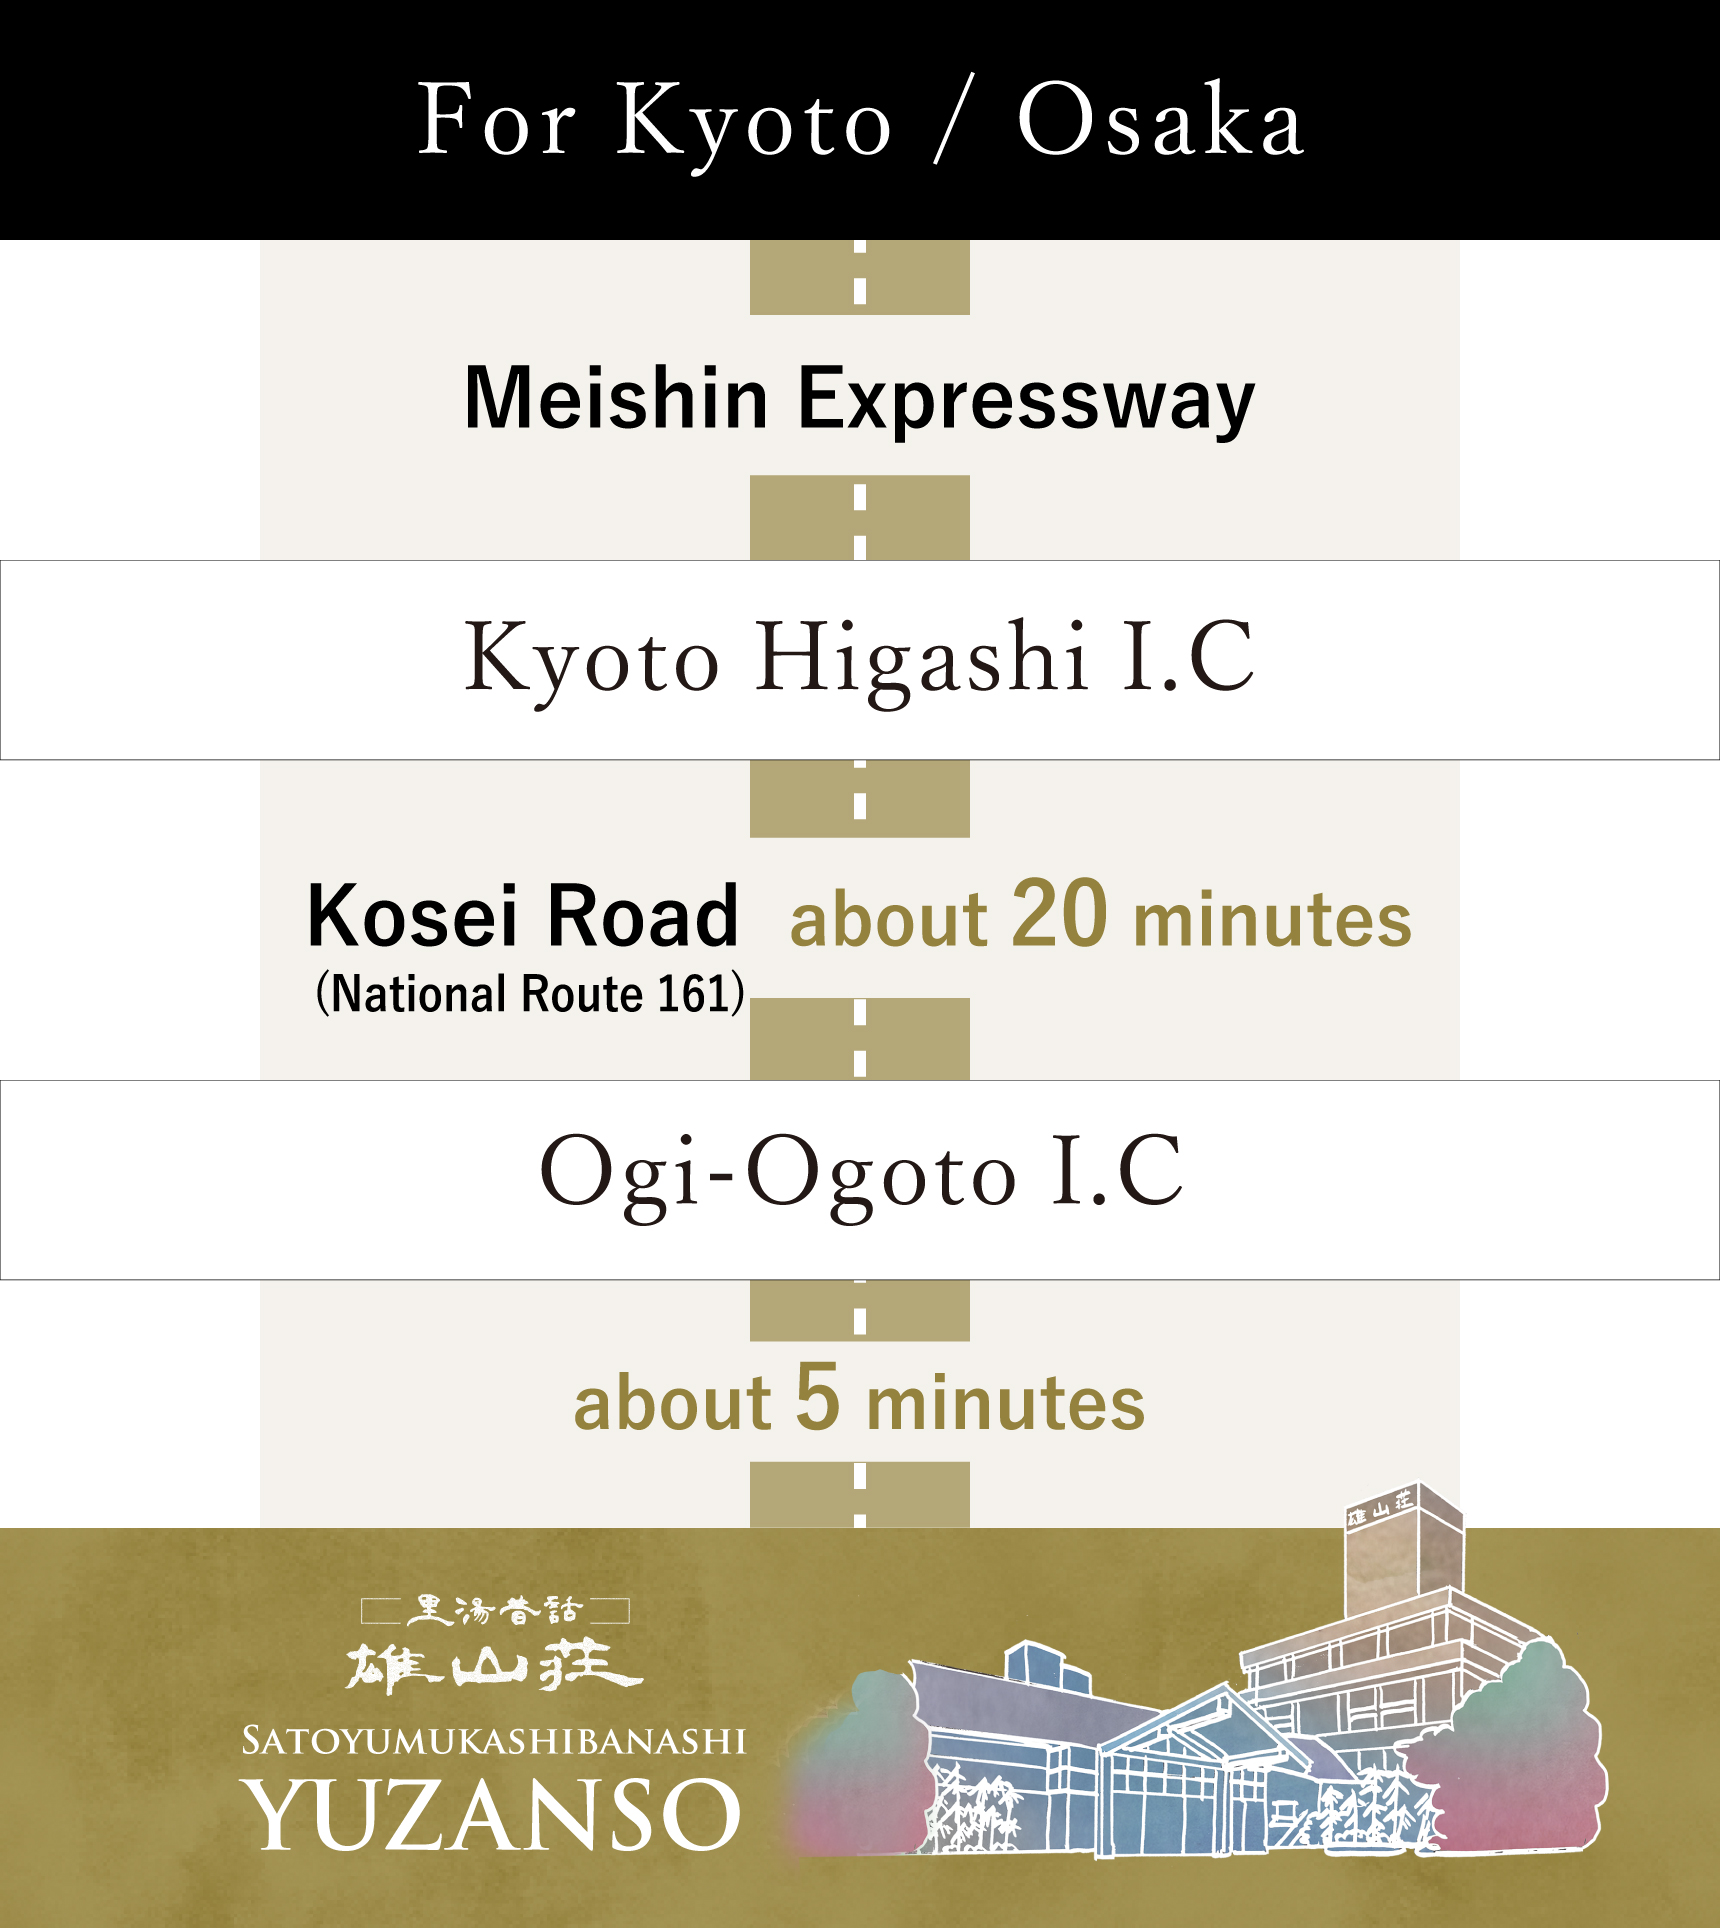 Kyoto-Osaka direction